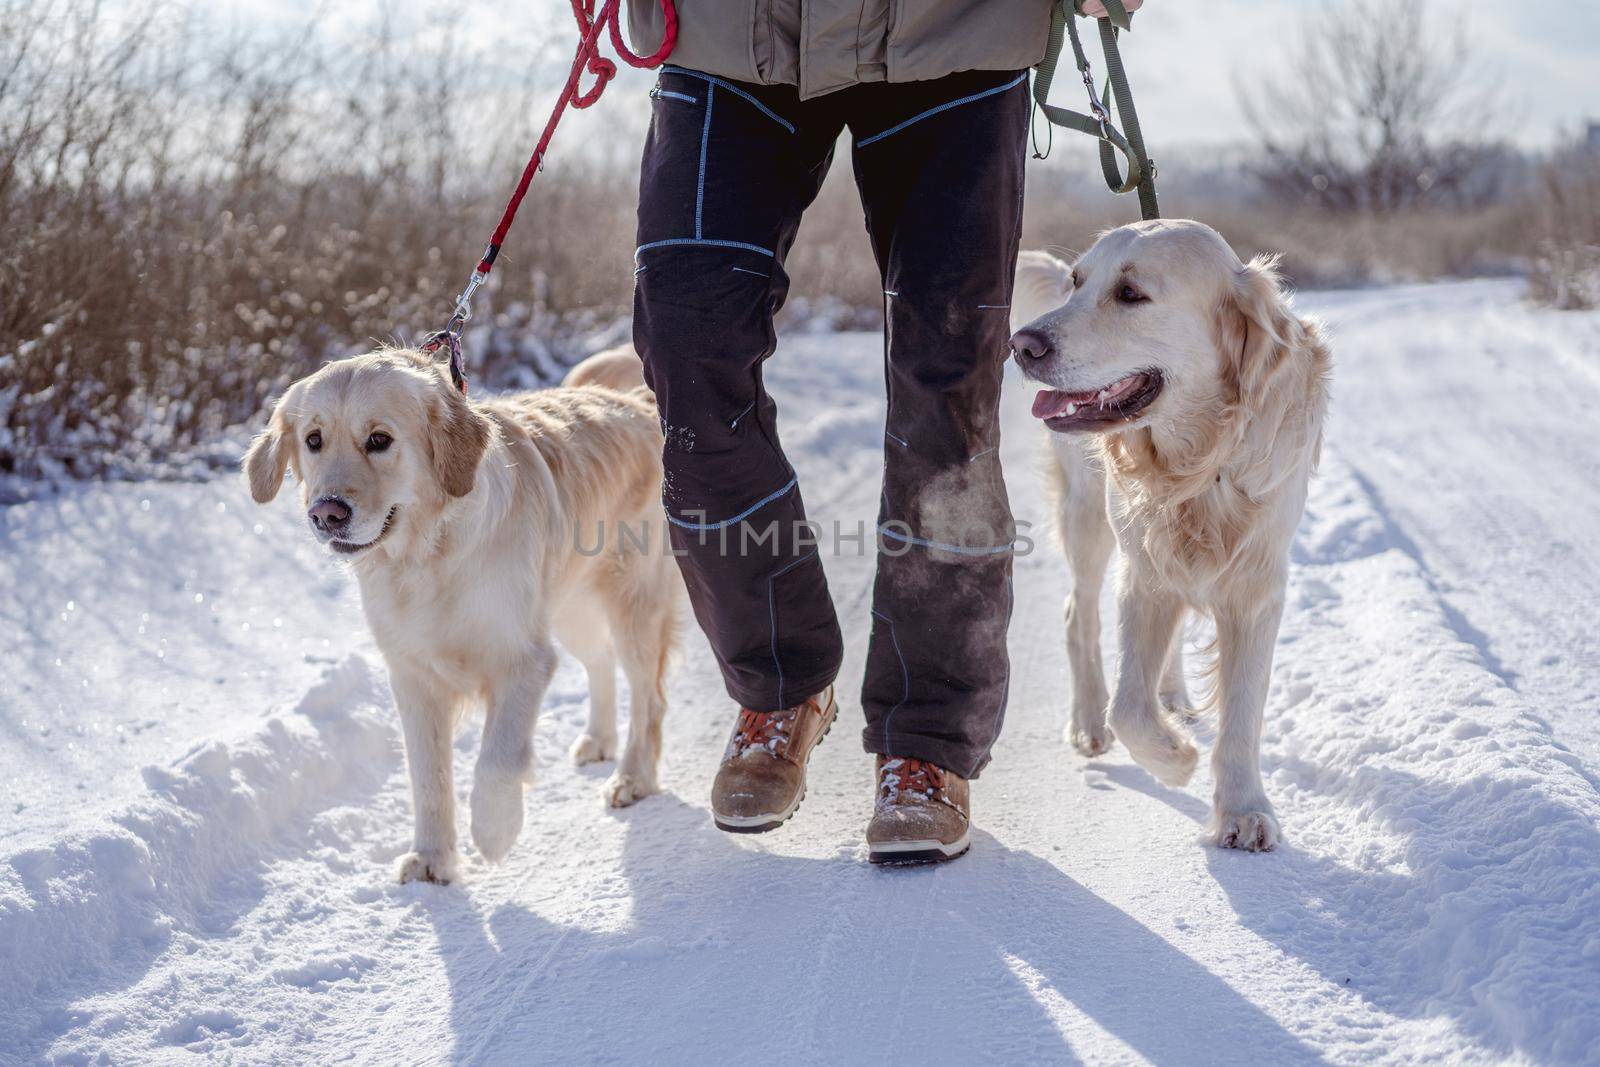 Man walking golden retriever dogs along snowy road on winter nature